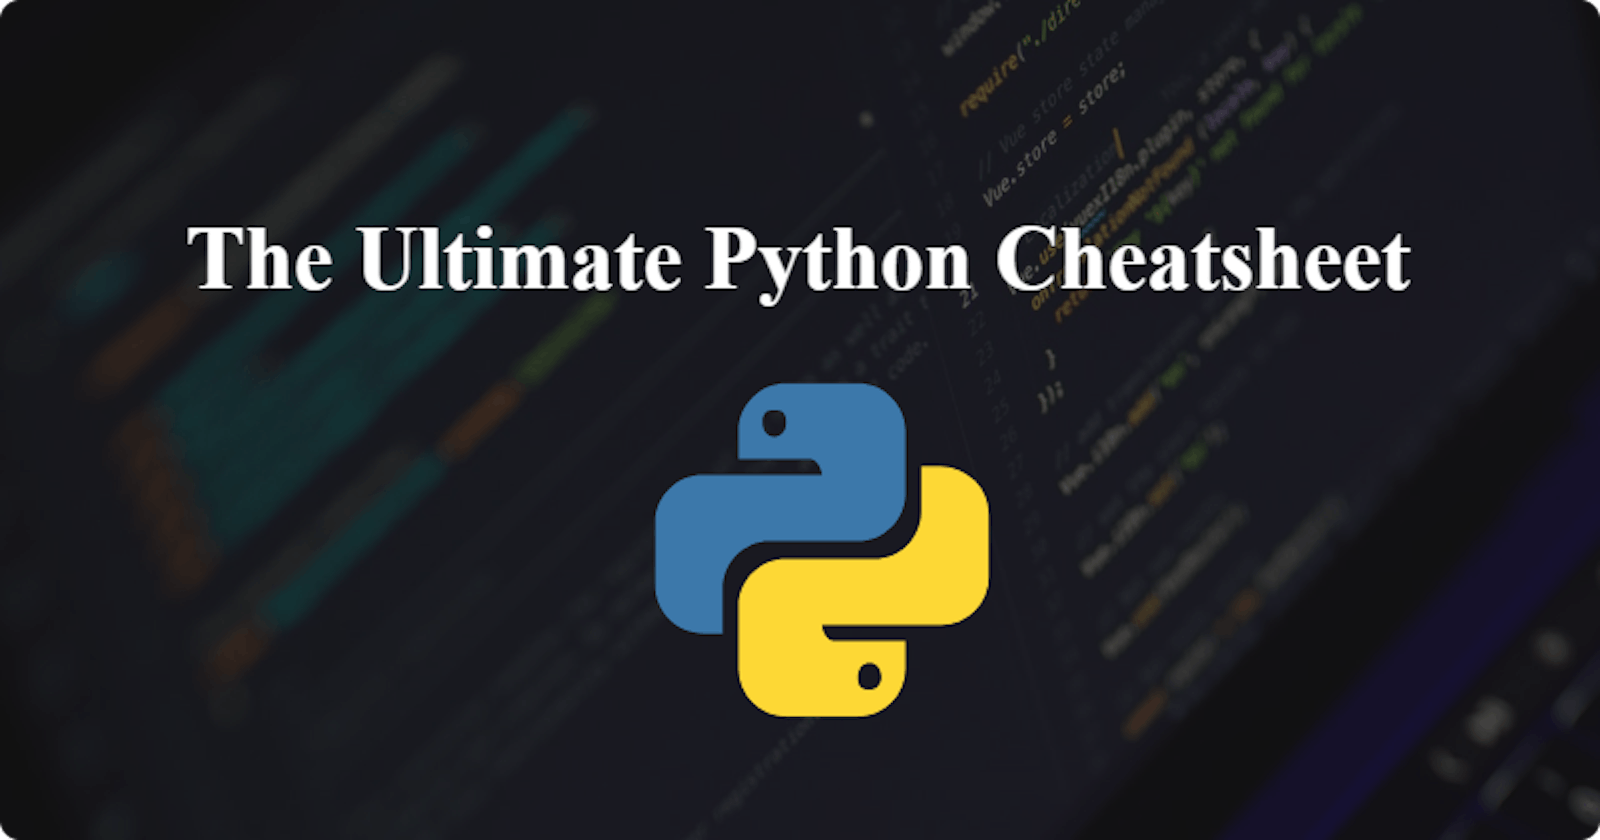 The Ultimate Python Cheatsheet